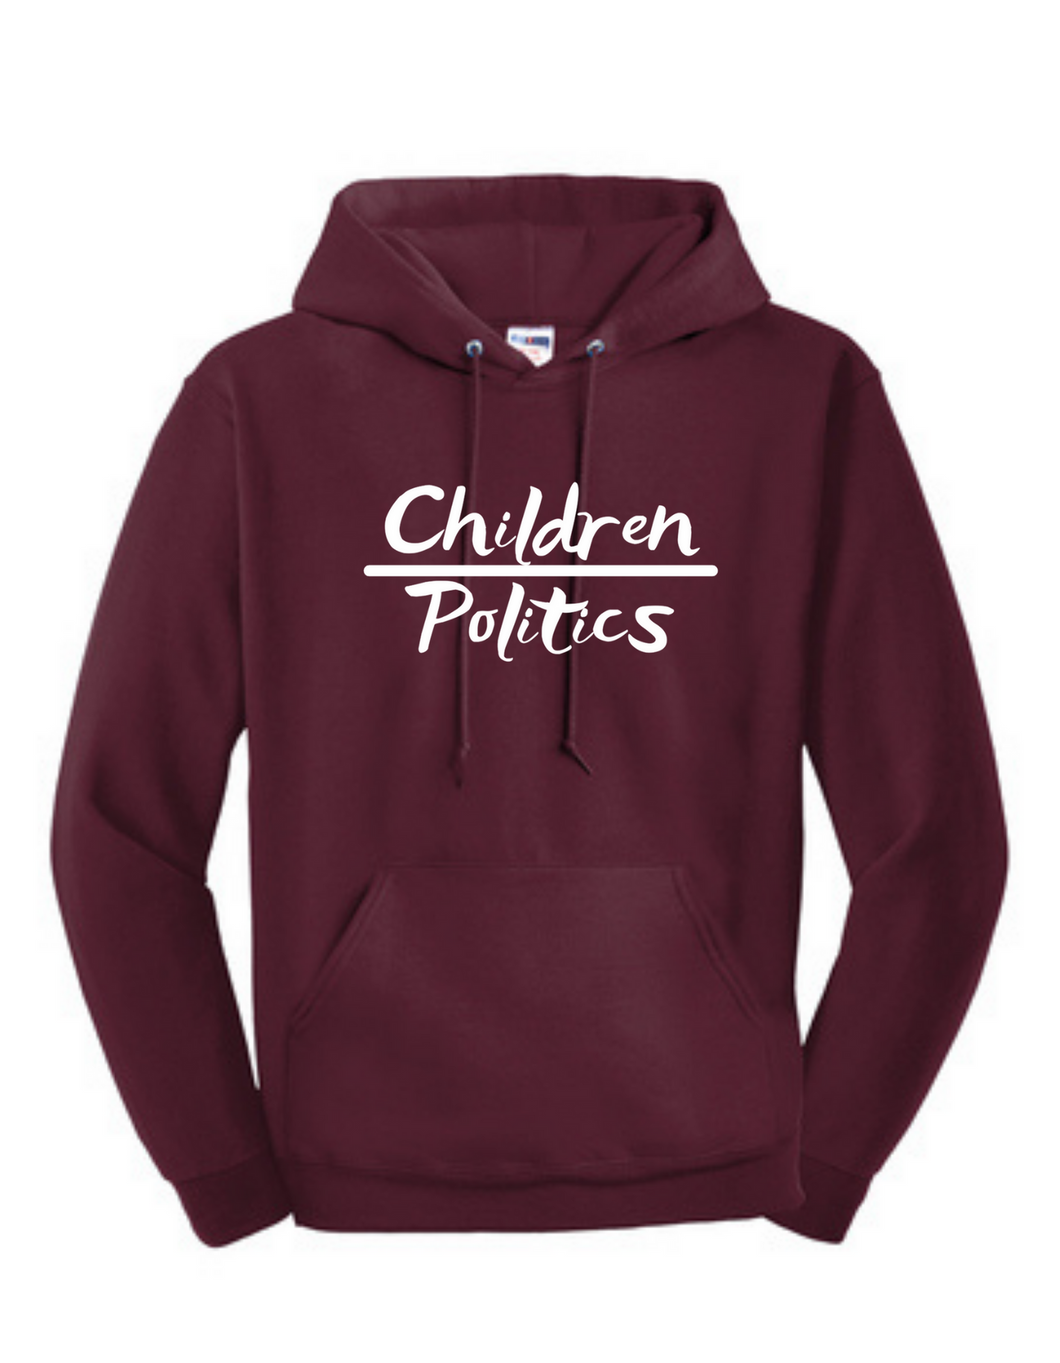 Children OVER Politics Hoodie